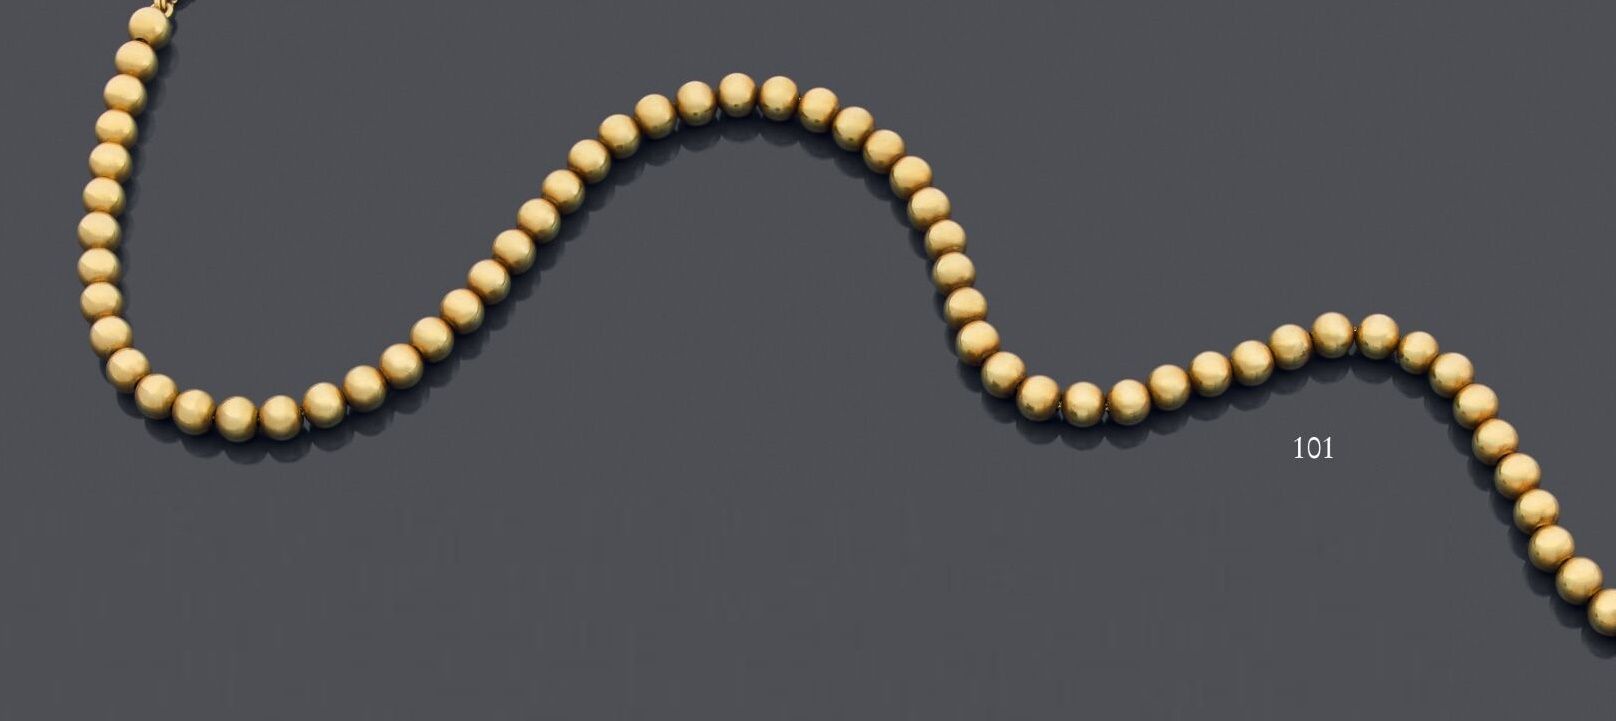 Null 金色吊坠球铰接式项链。
(已佩戴）。
长度：44 厘米 
毛重：35 克